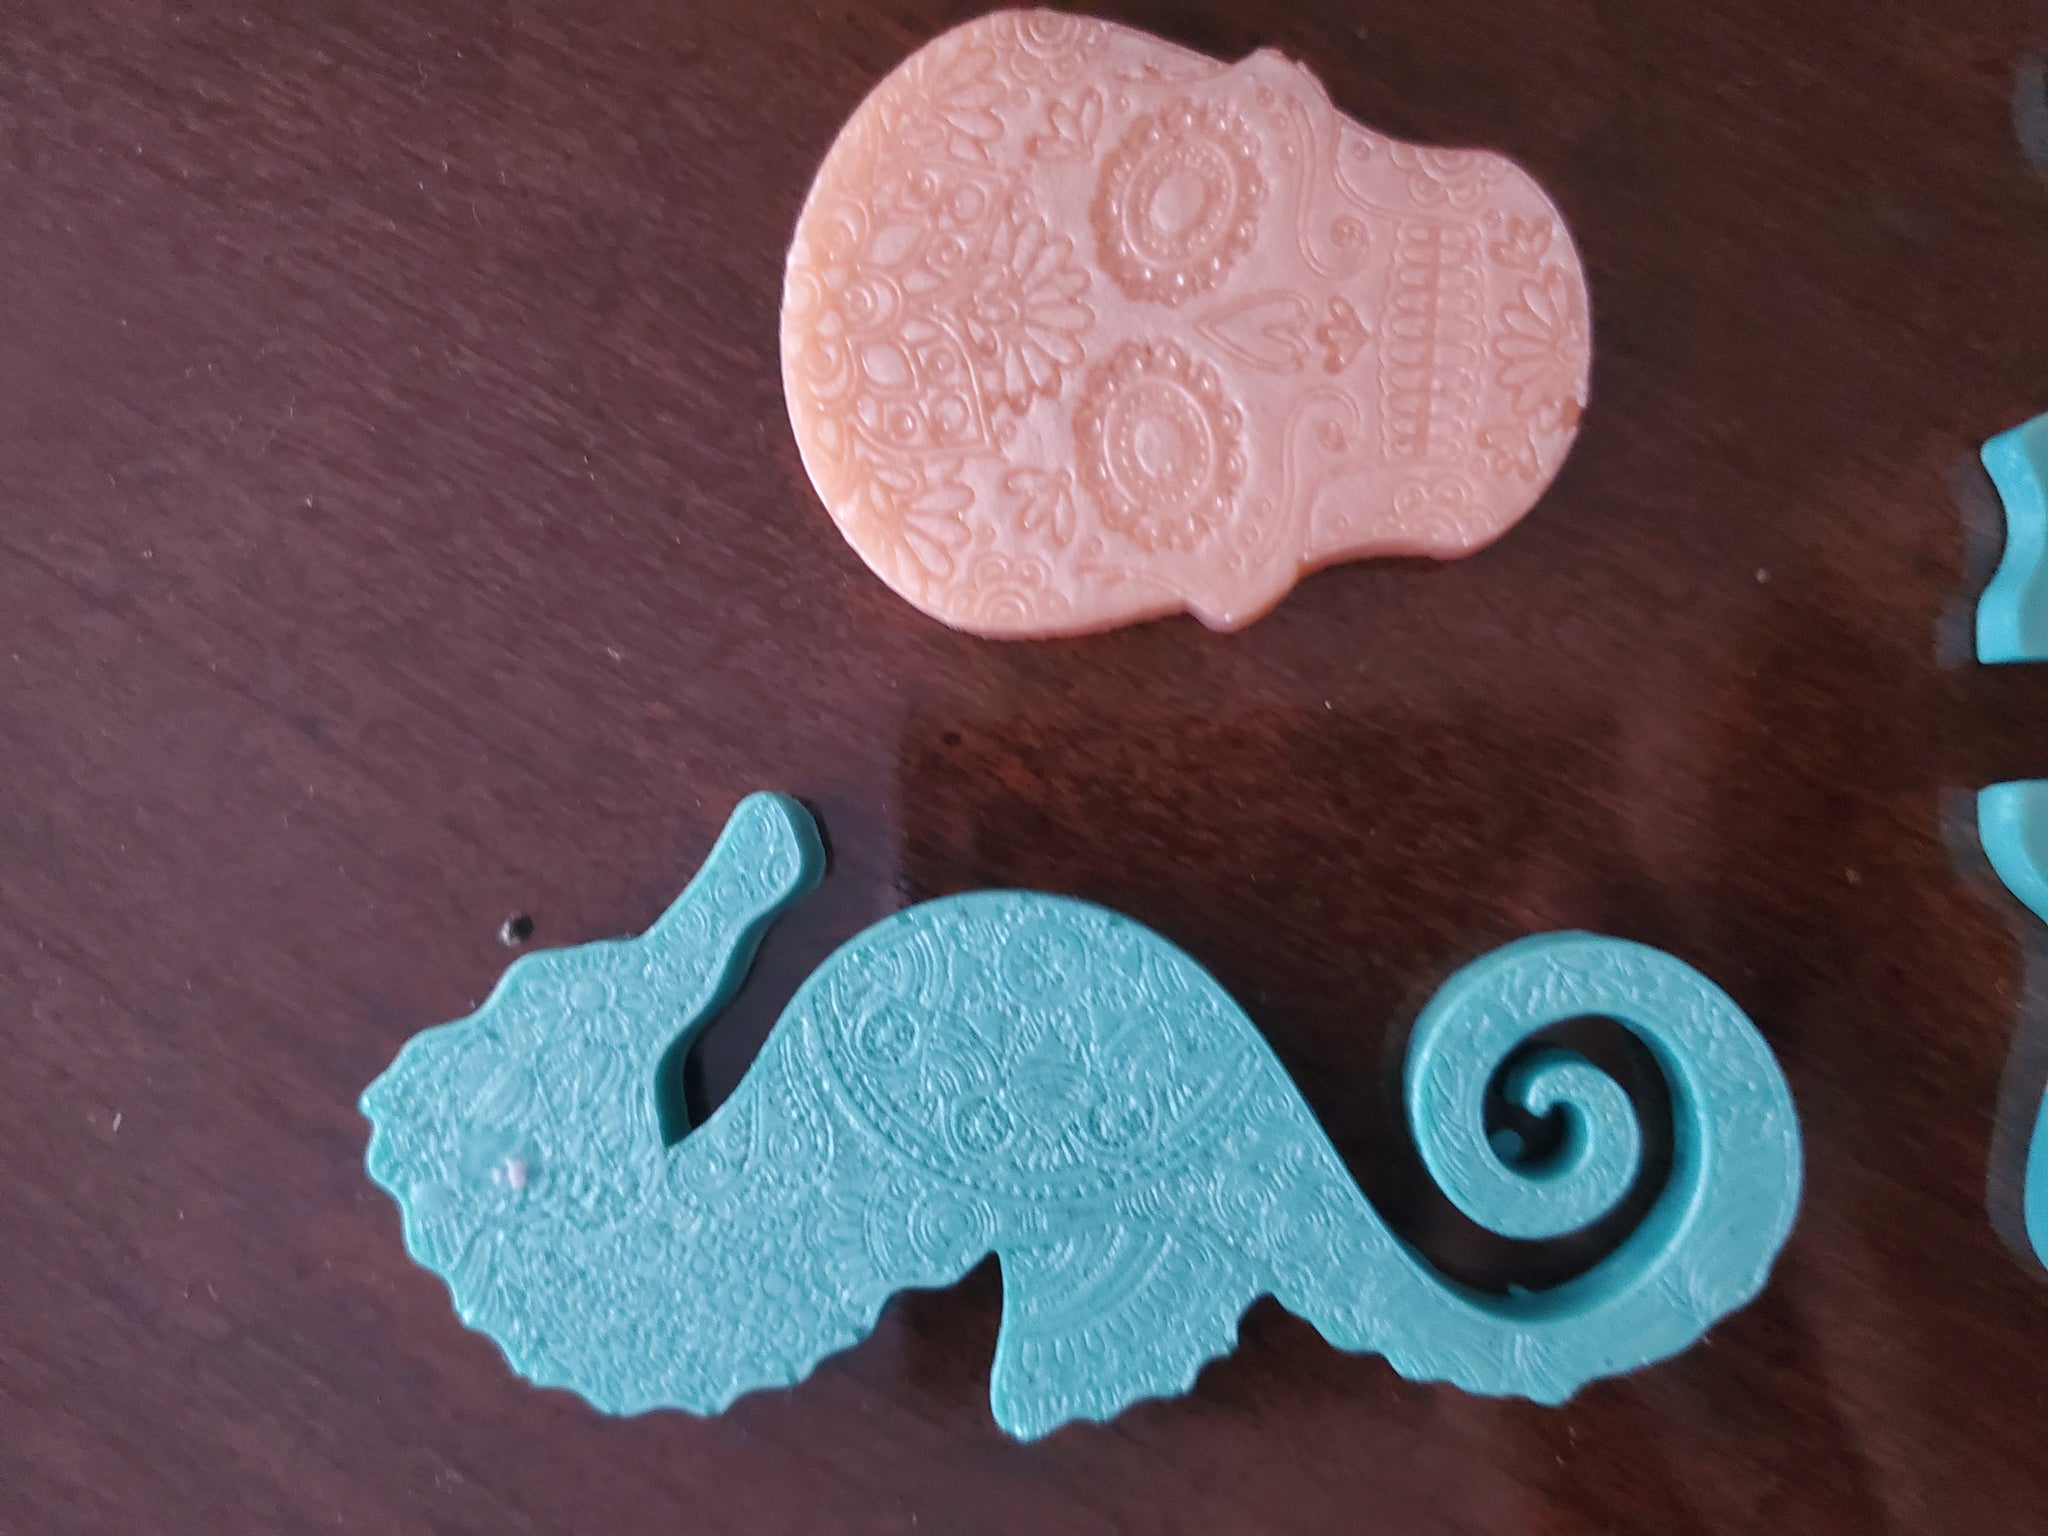 Handmade 8 piece Cotton Candy Swirl Coasters, Bookmarks, Decoration Set